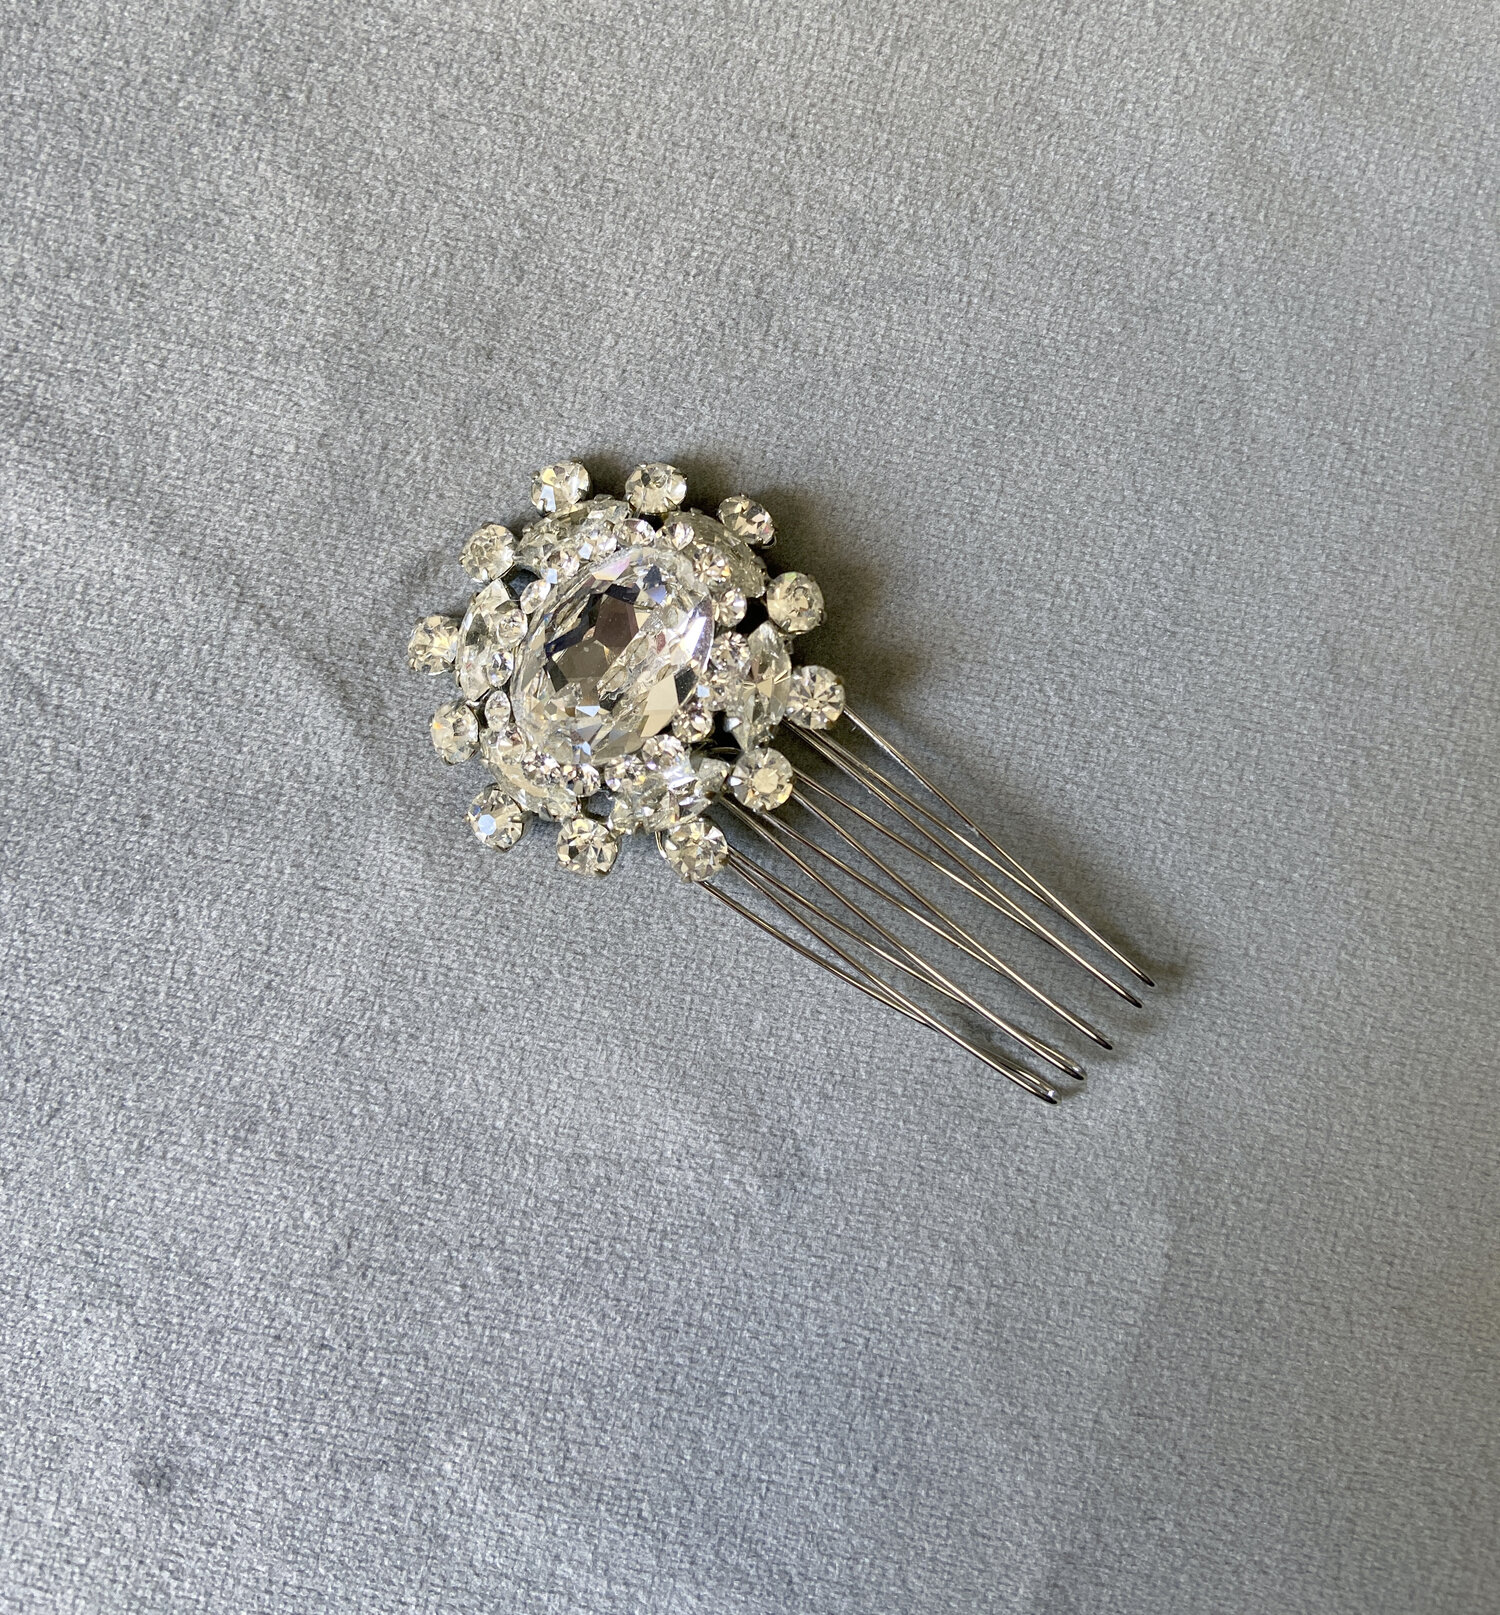 Organza Leaves, Rhinestone, and Pearl Belt - Bridal Accessories - The White Flower - San Diego, CA